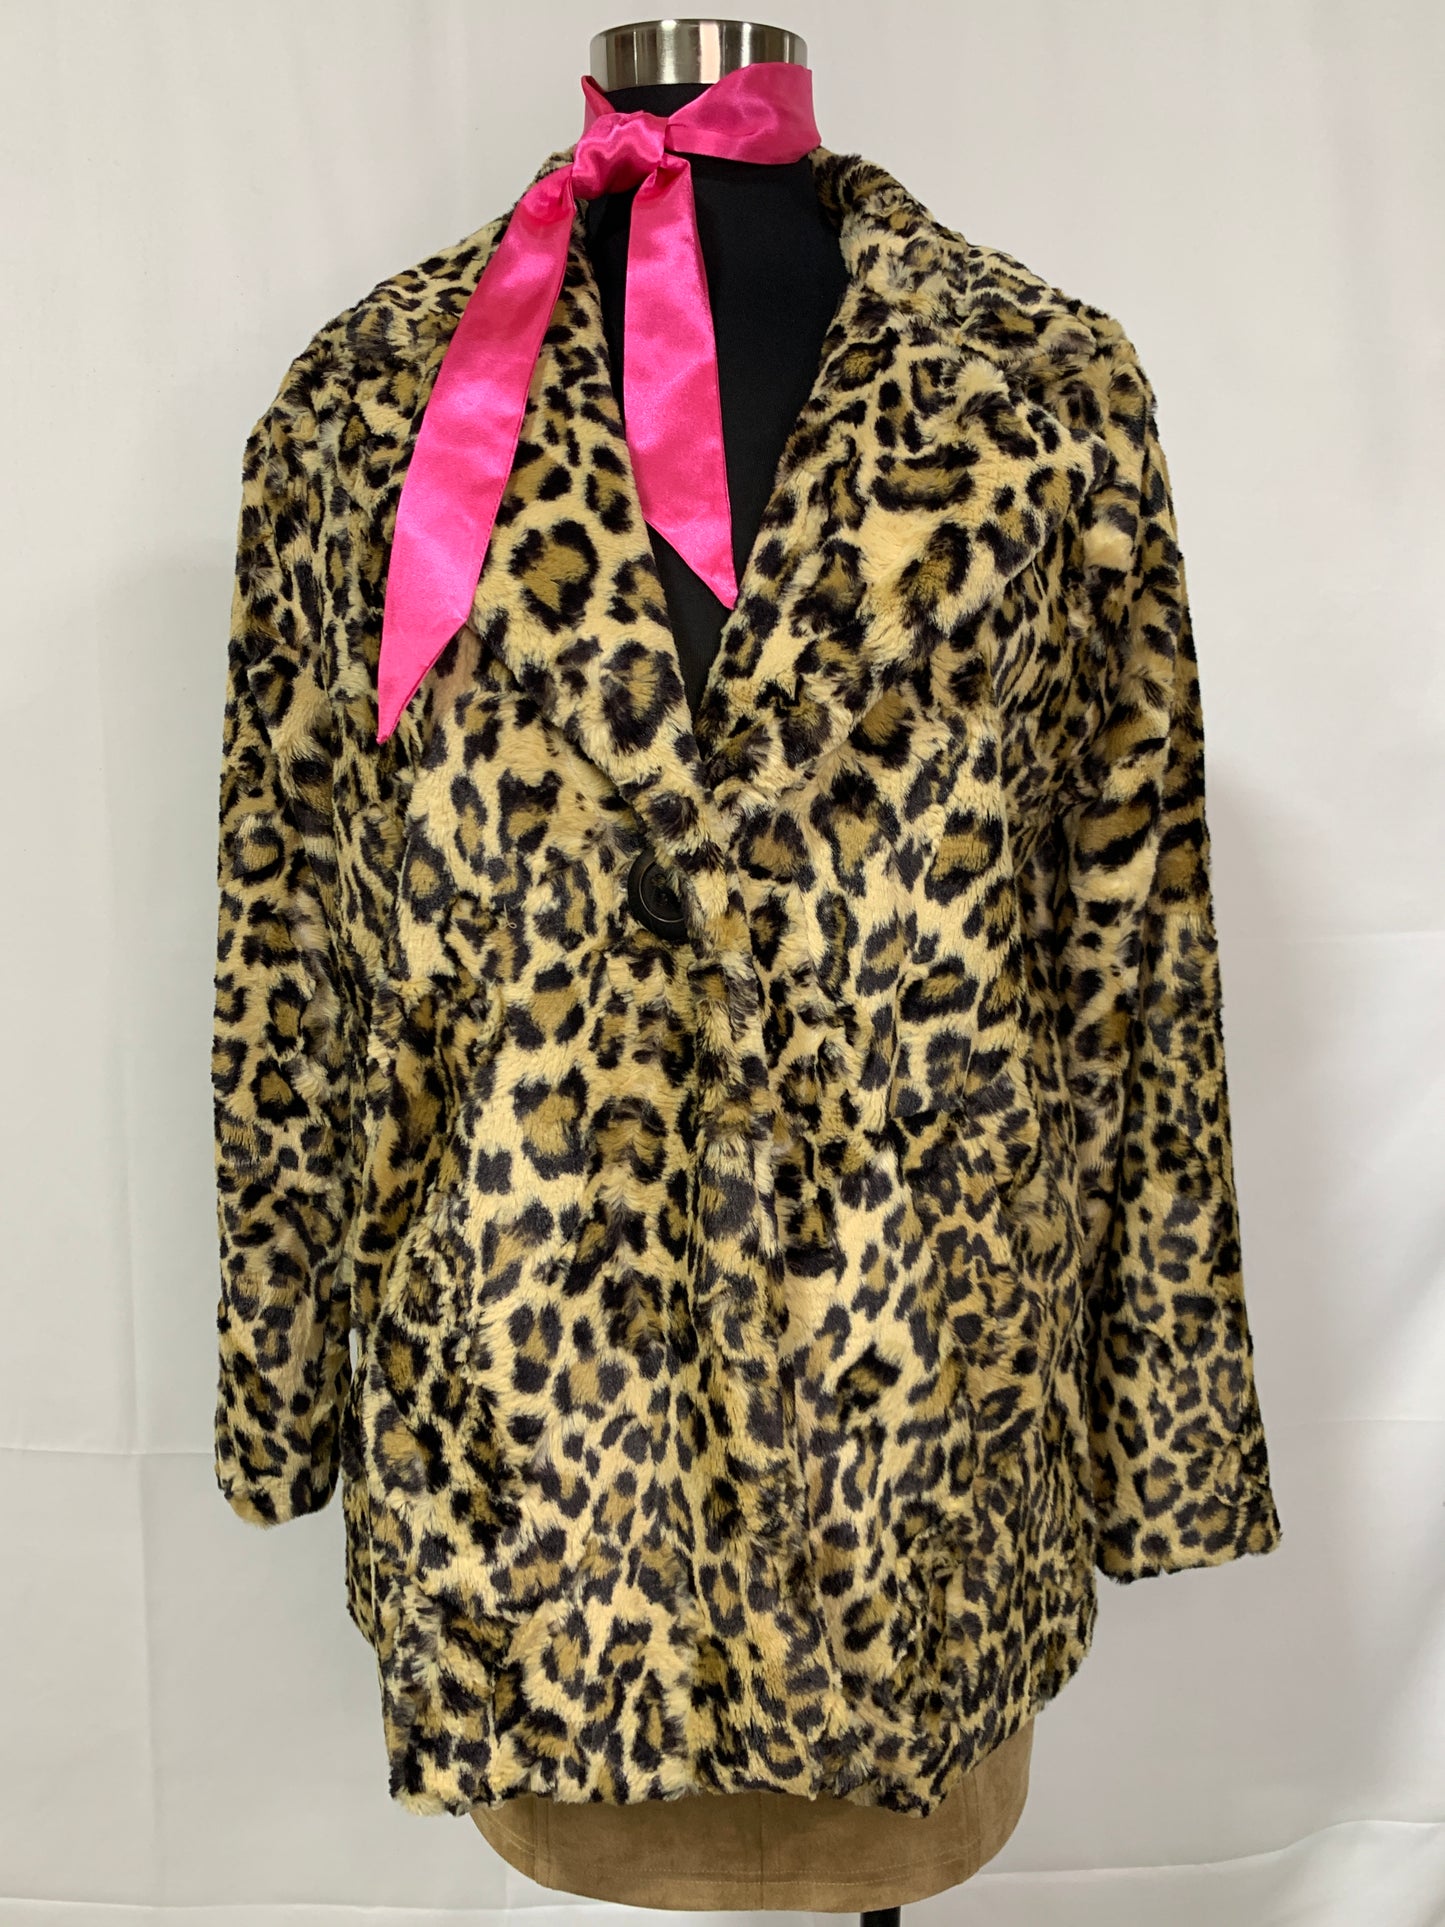 Ivy Jane Cheetalicious Jacket